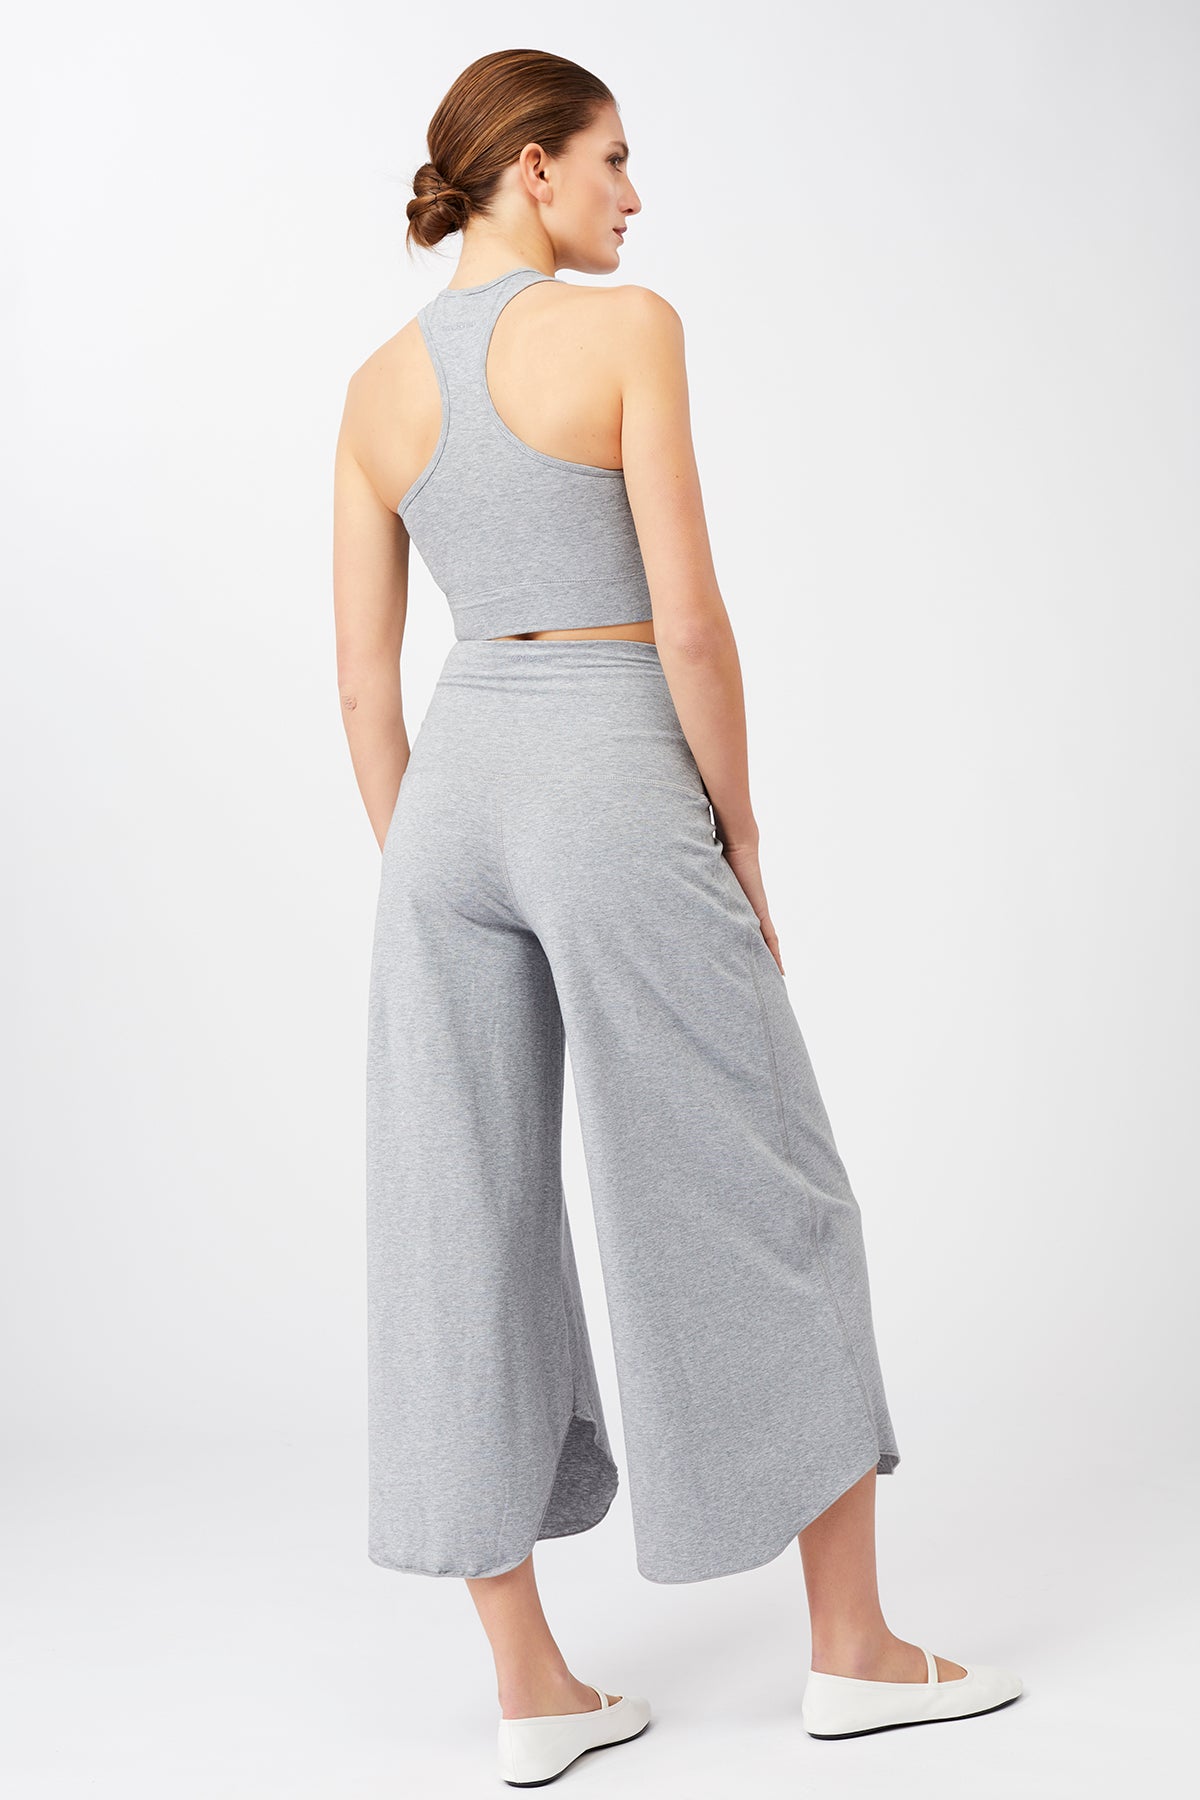 Mandala Yoga Pant Grau Outfit Rückseite - Roll Over Tulip Pants